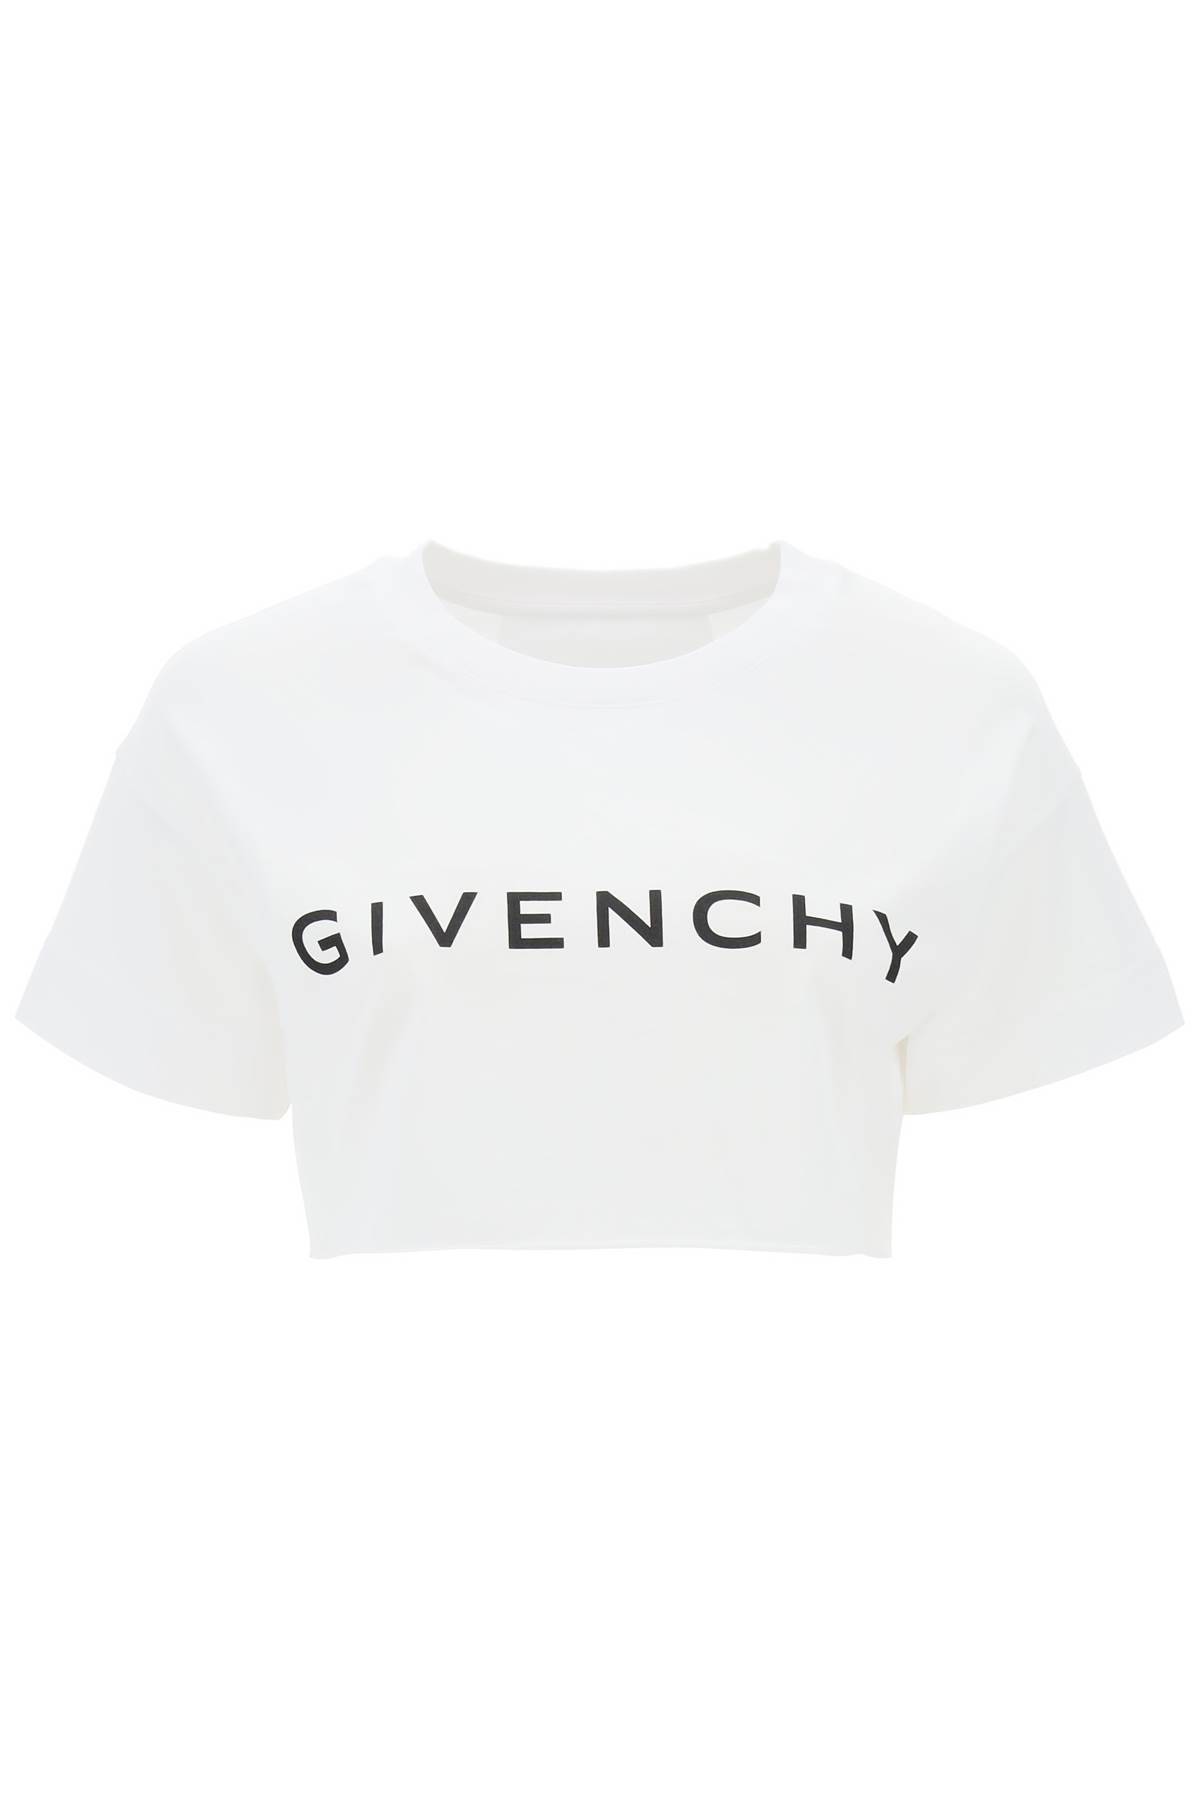 Givenchy GIVENCHY cropped logo t-shirt